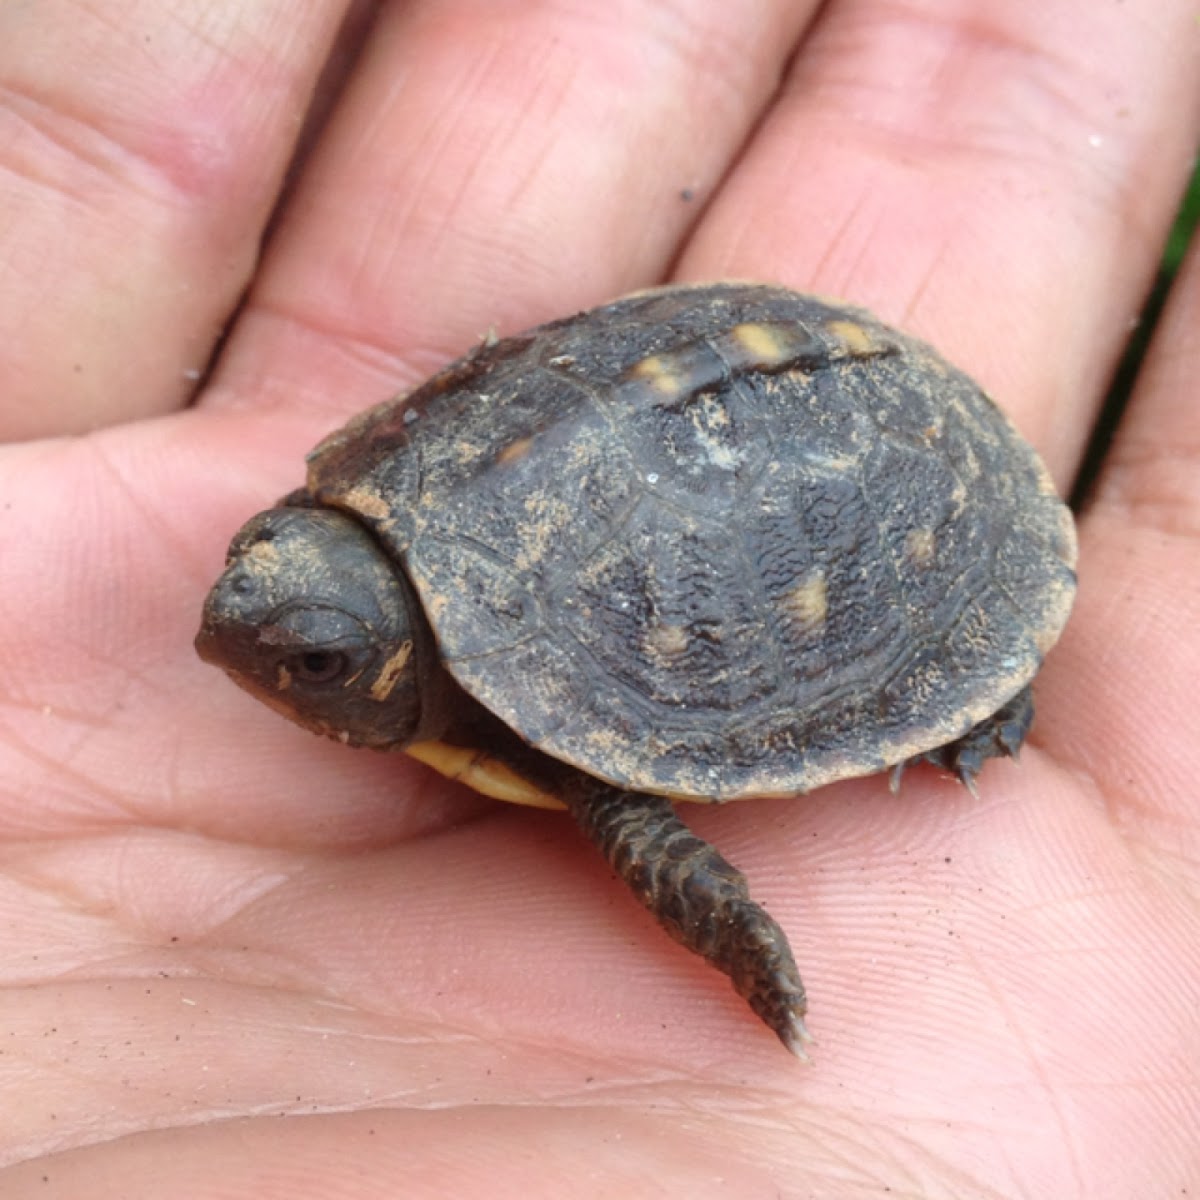 Eastern Box Turtle (Juvenile)